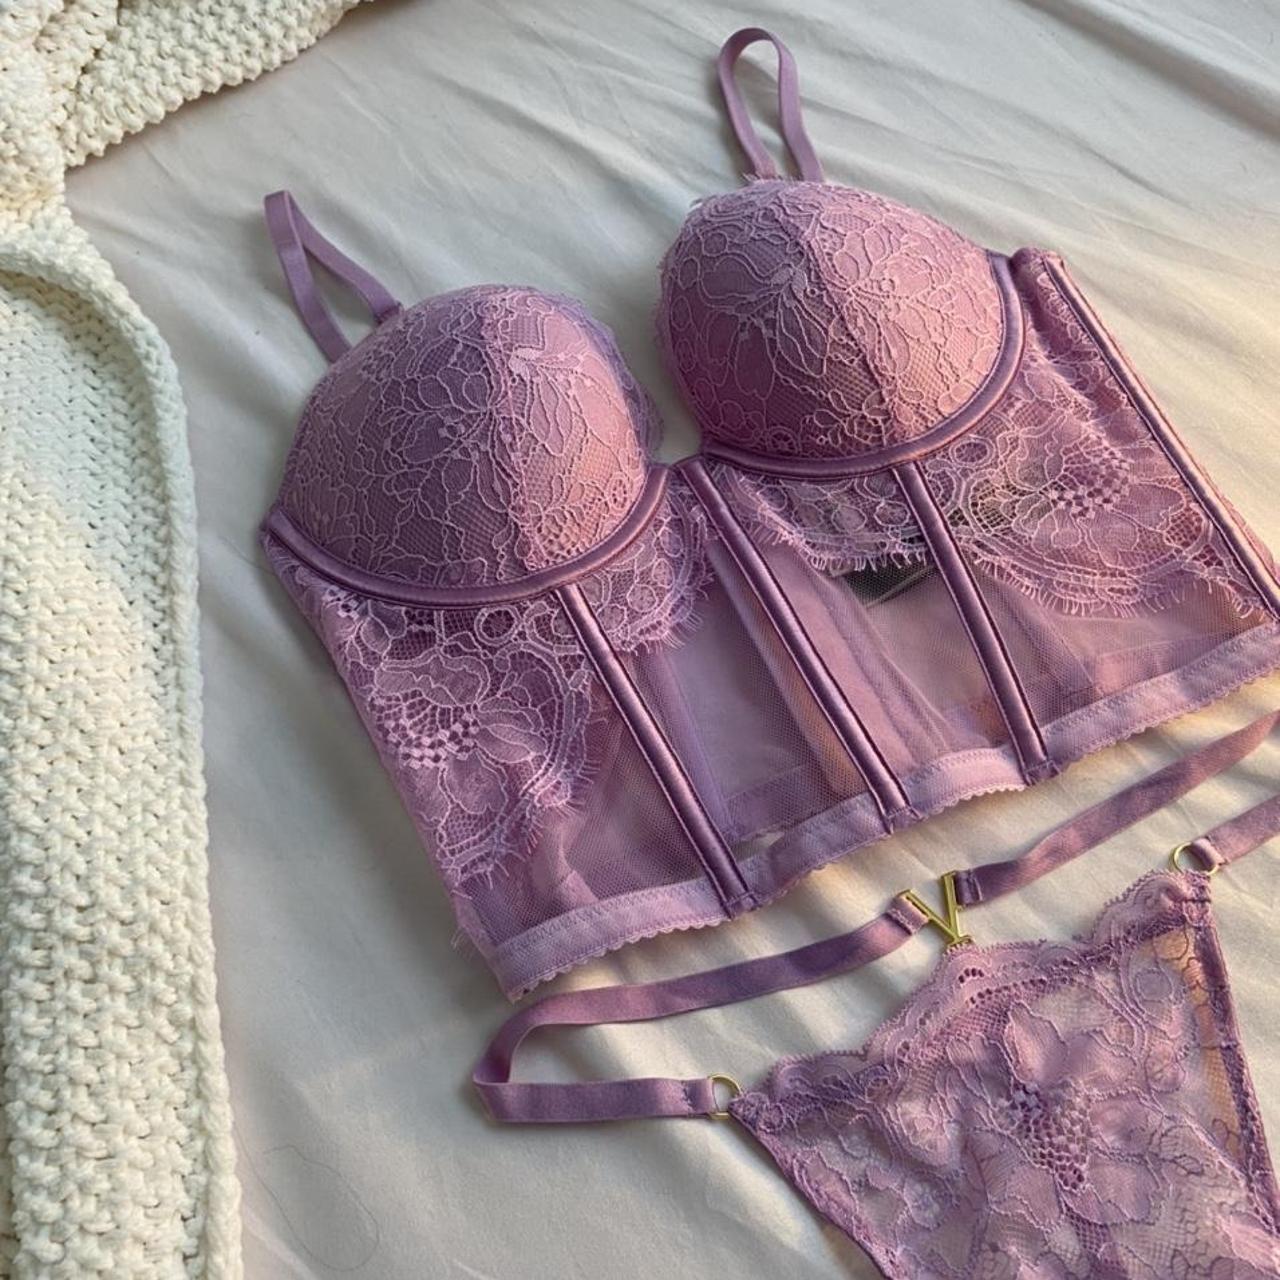 beautiful vs lingerie set 🌸💜💜 never worn/ size 32C - Depop